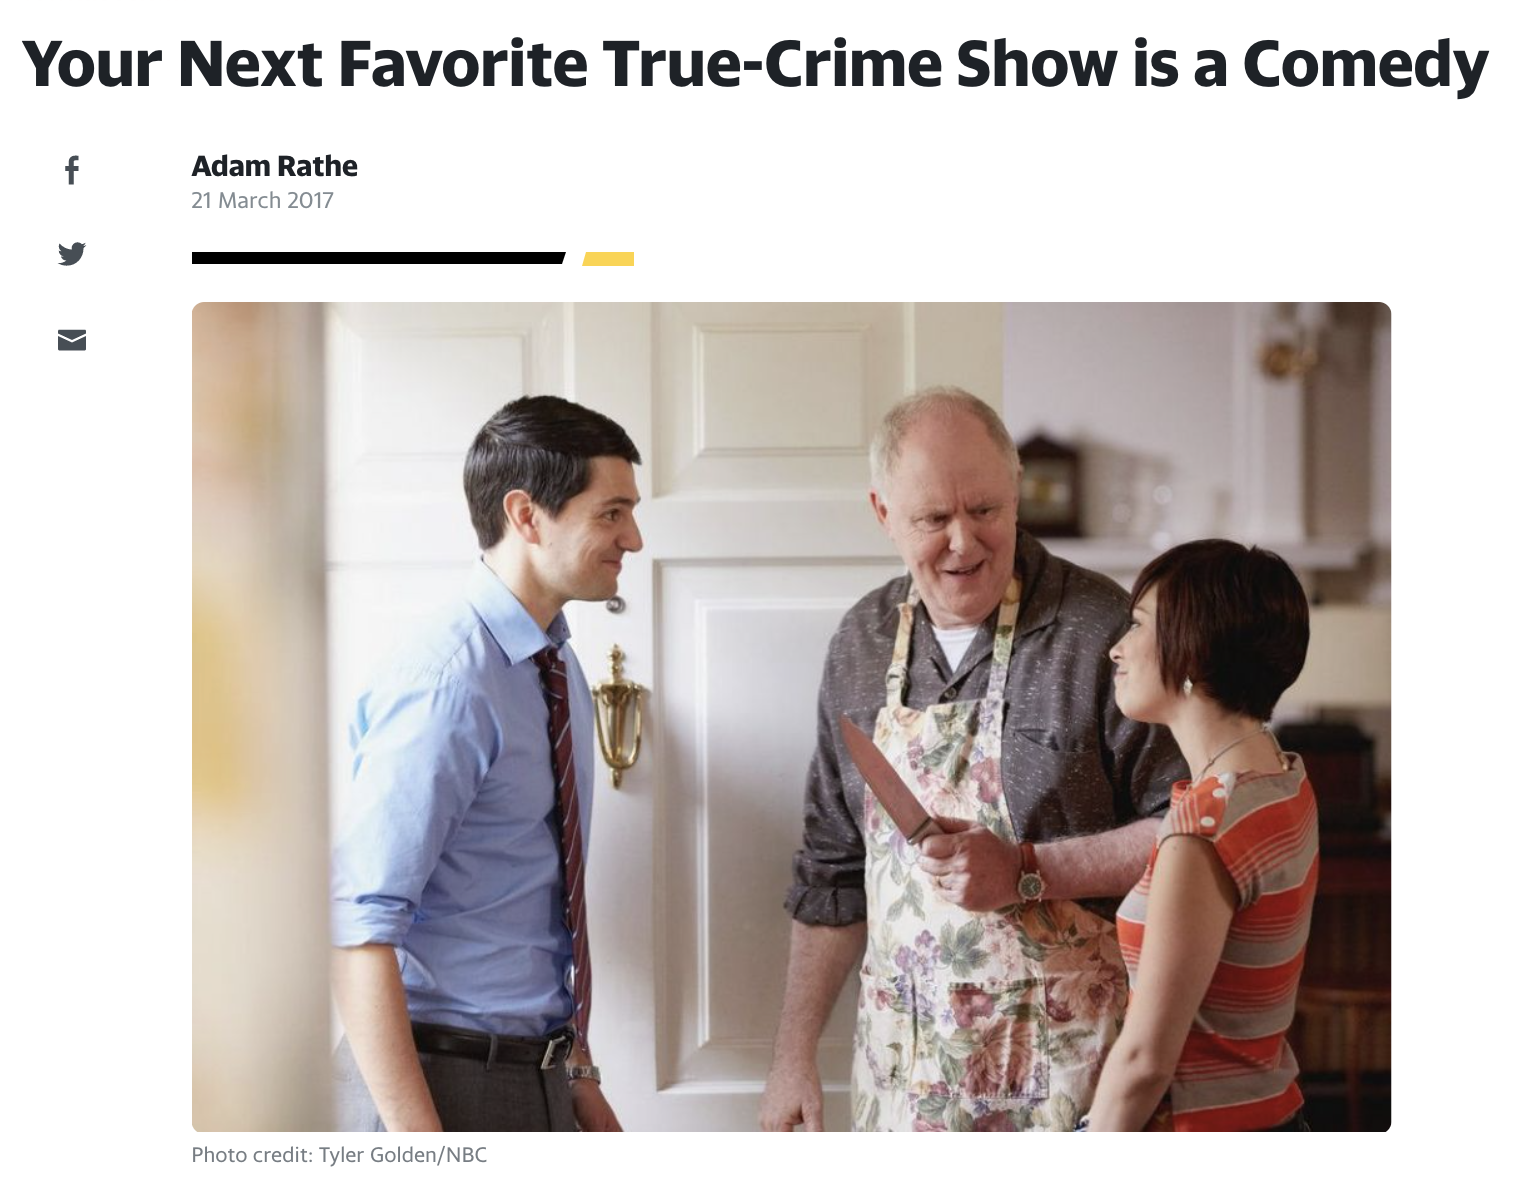   https://in.finance.yahoo.com/news/next-favorite-true-crime-show-164836975.html  